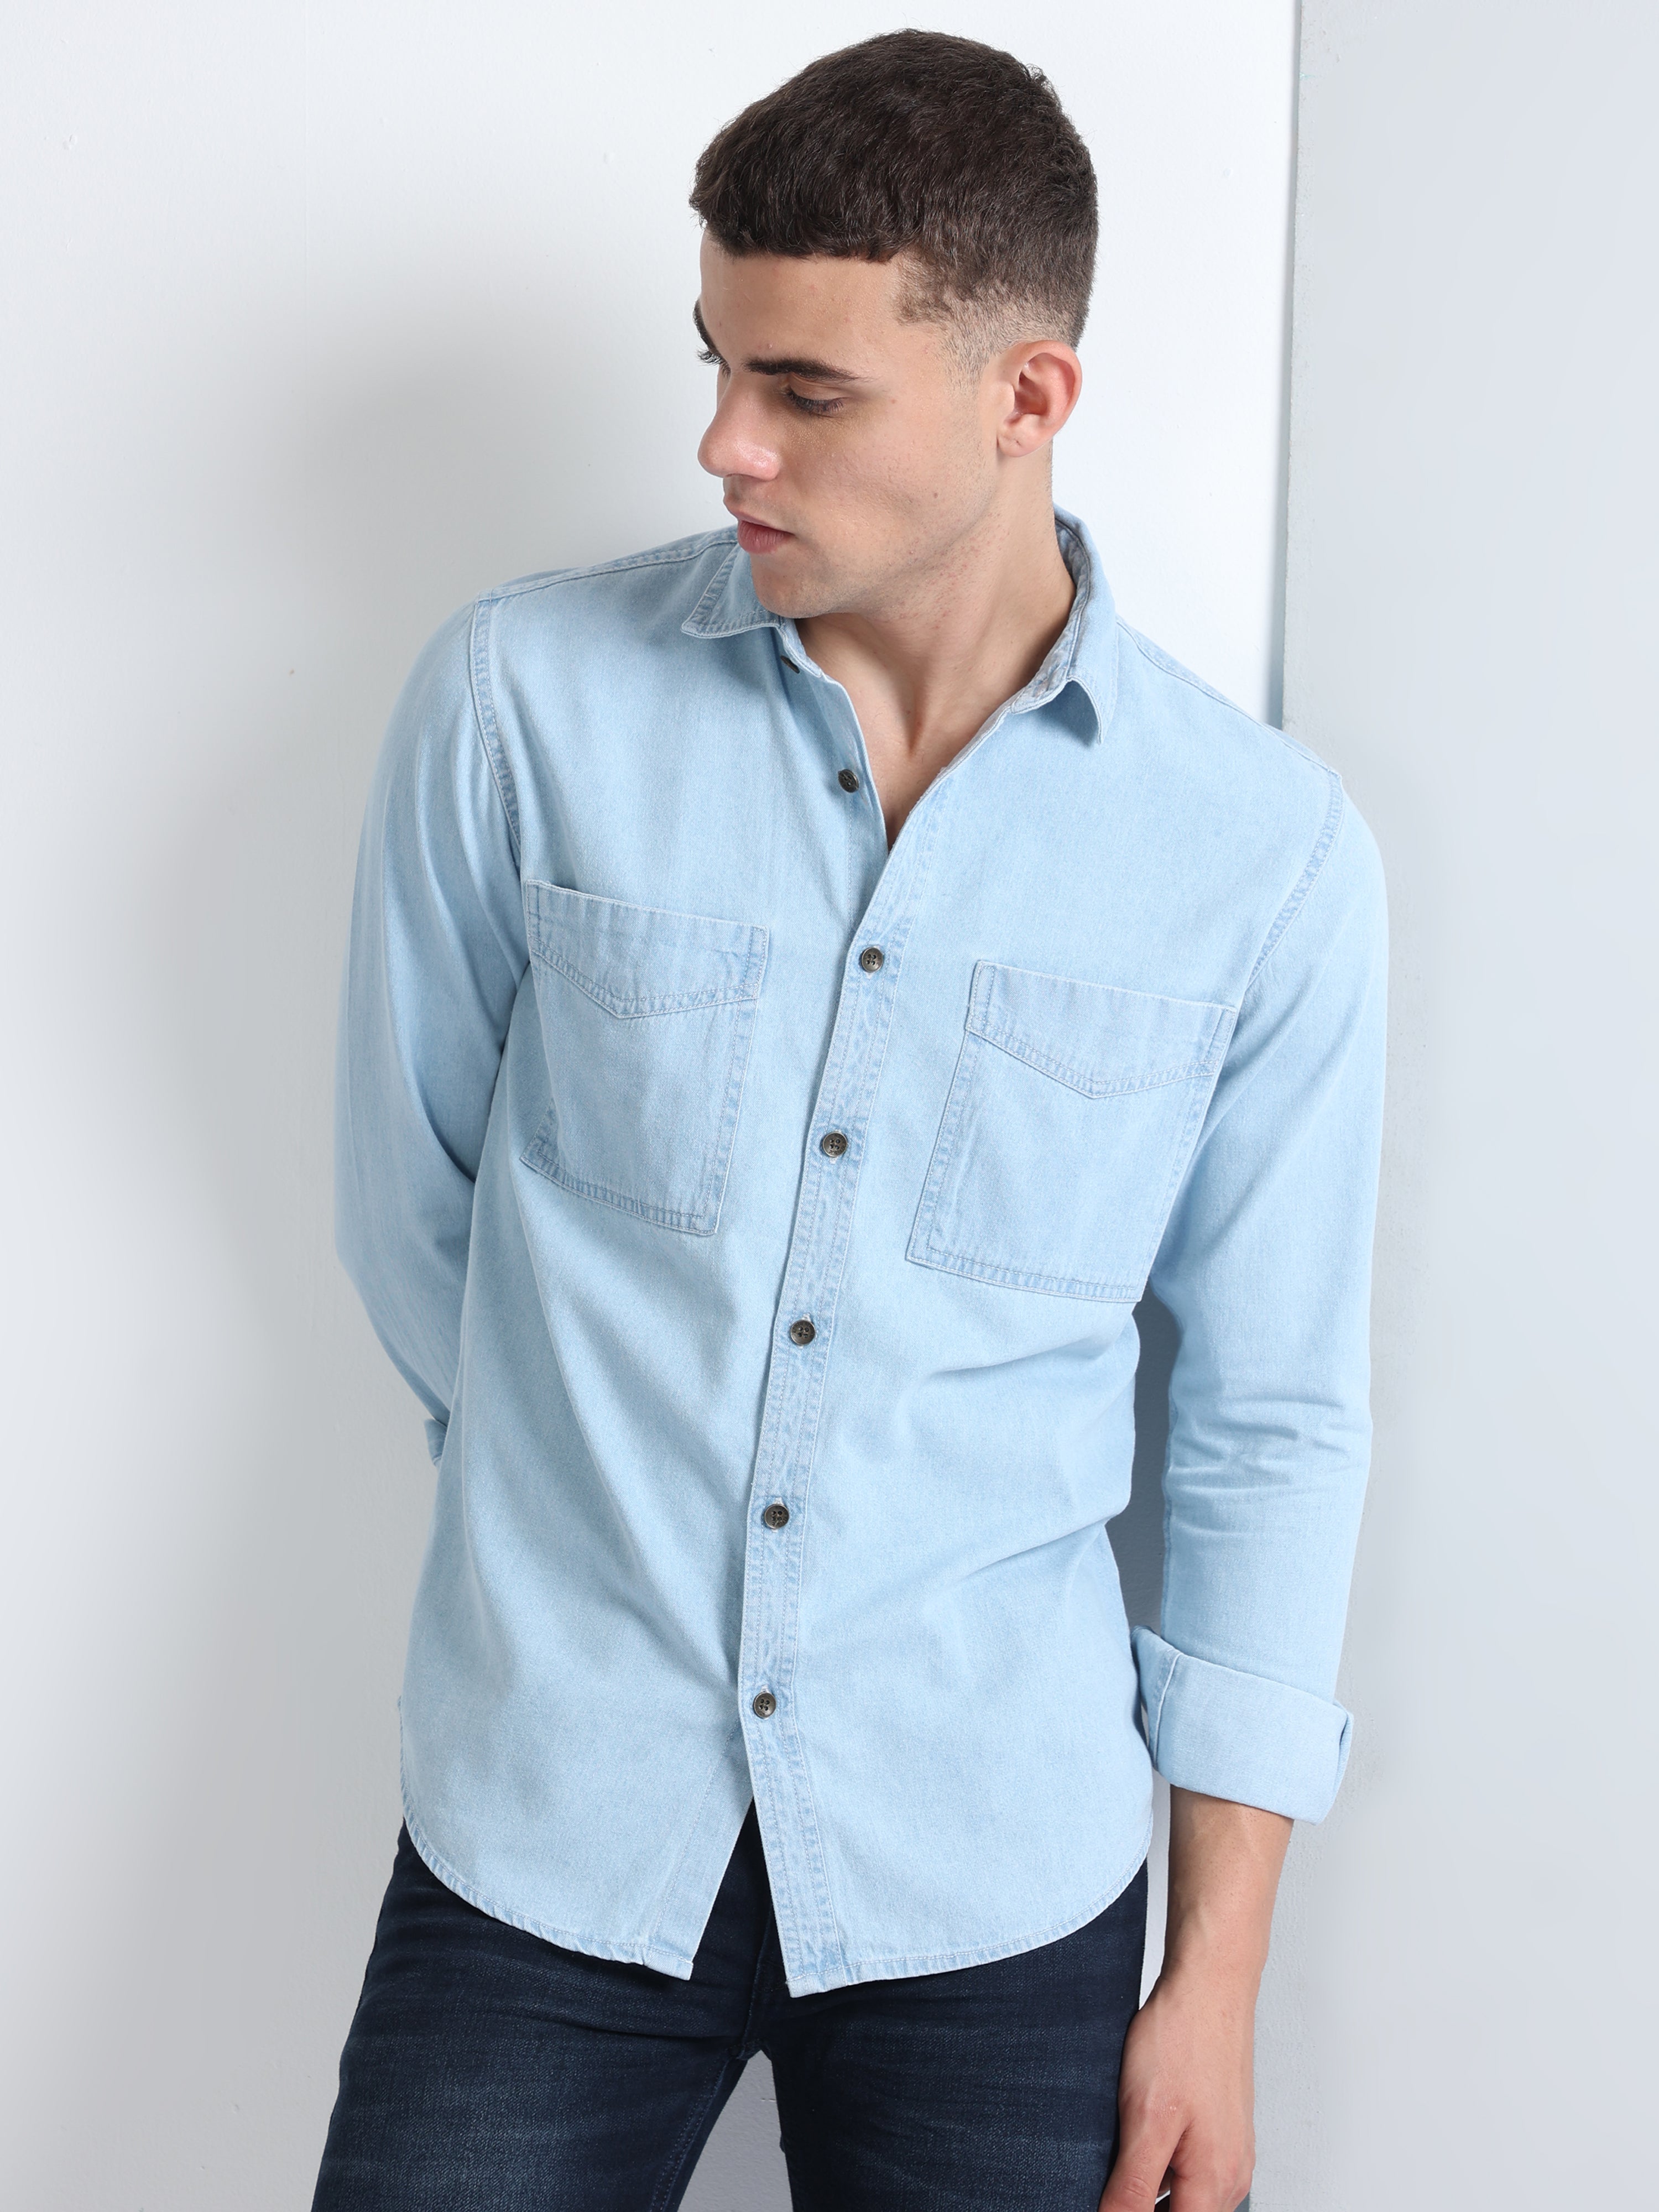 Amazon.com: Alloaone Jeans Long Sleeve Shirt Men Spring Fashion Light Blue Denim  Shirt Male Clothes : Clothing, Shoes & Jewelry